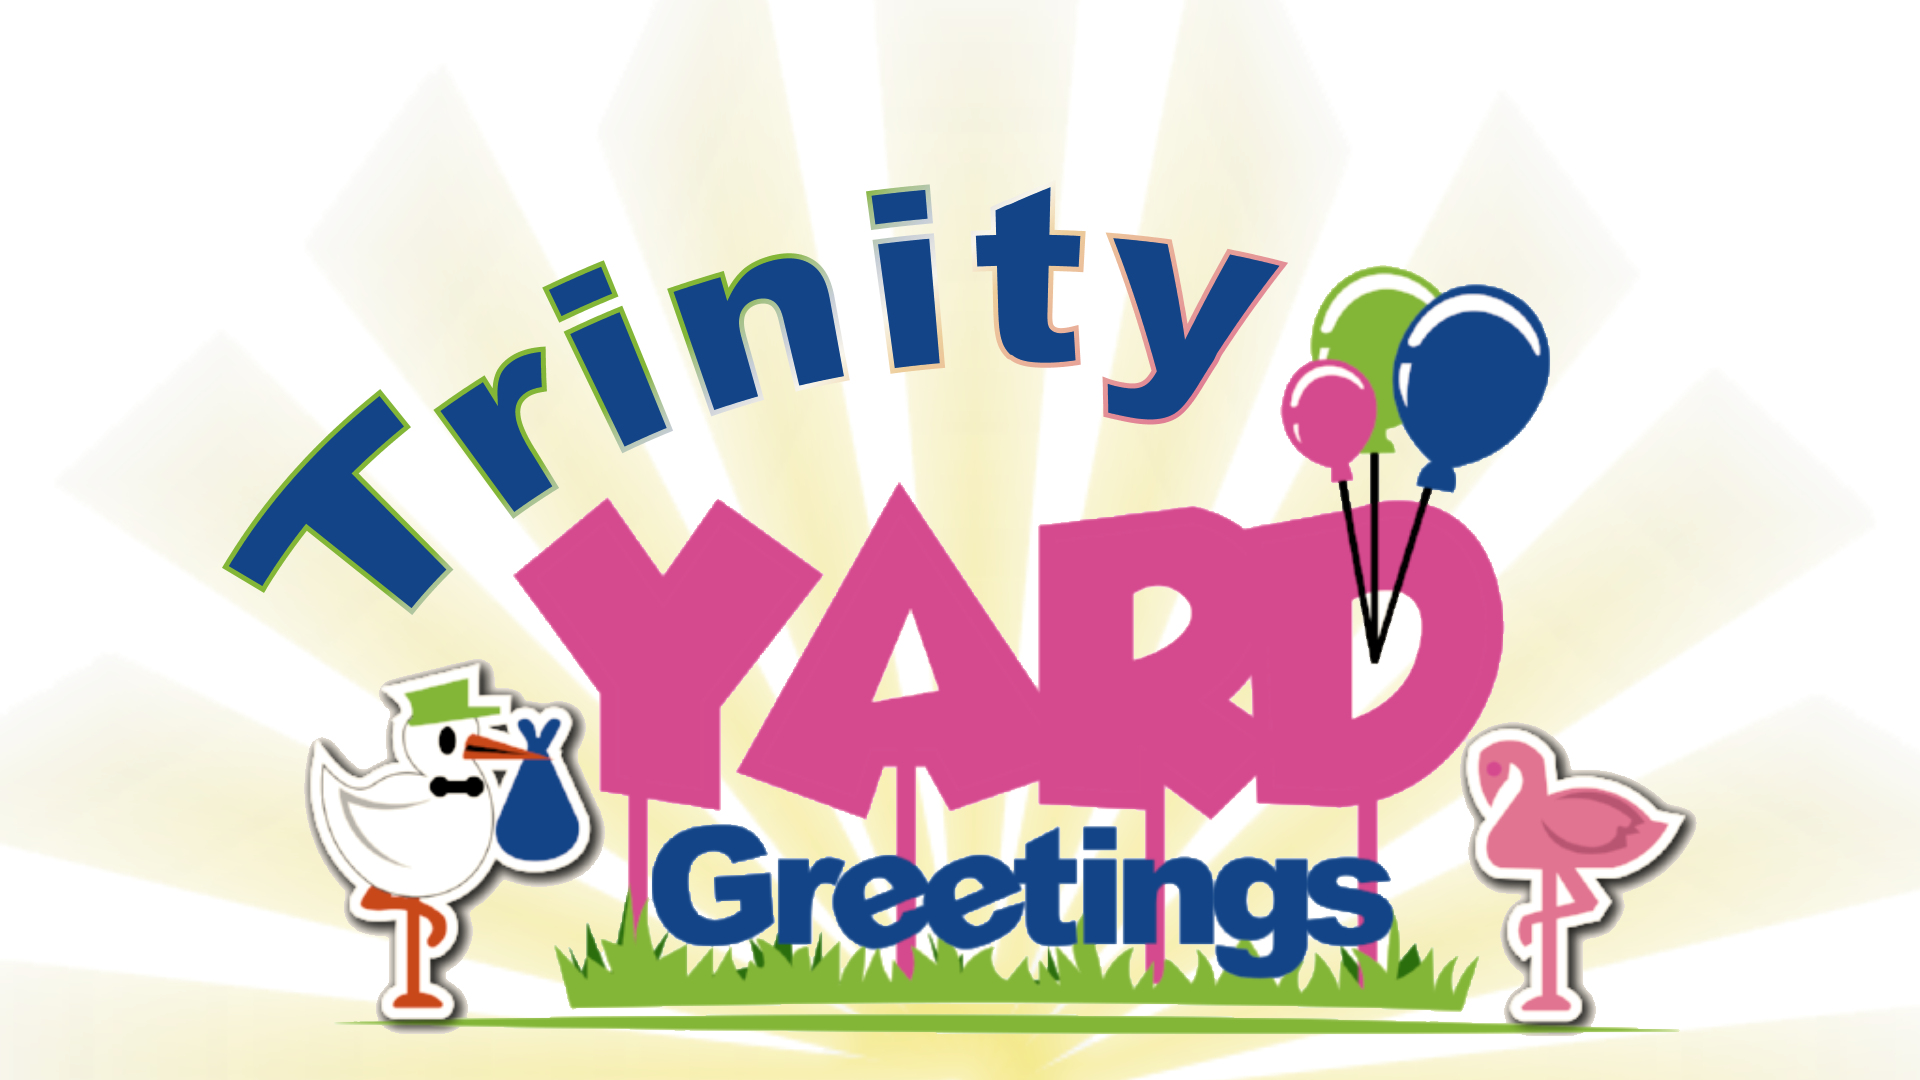 Trinity Yard Greetings